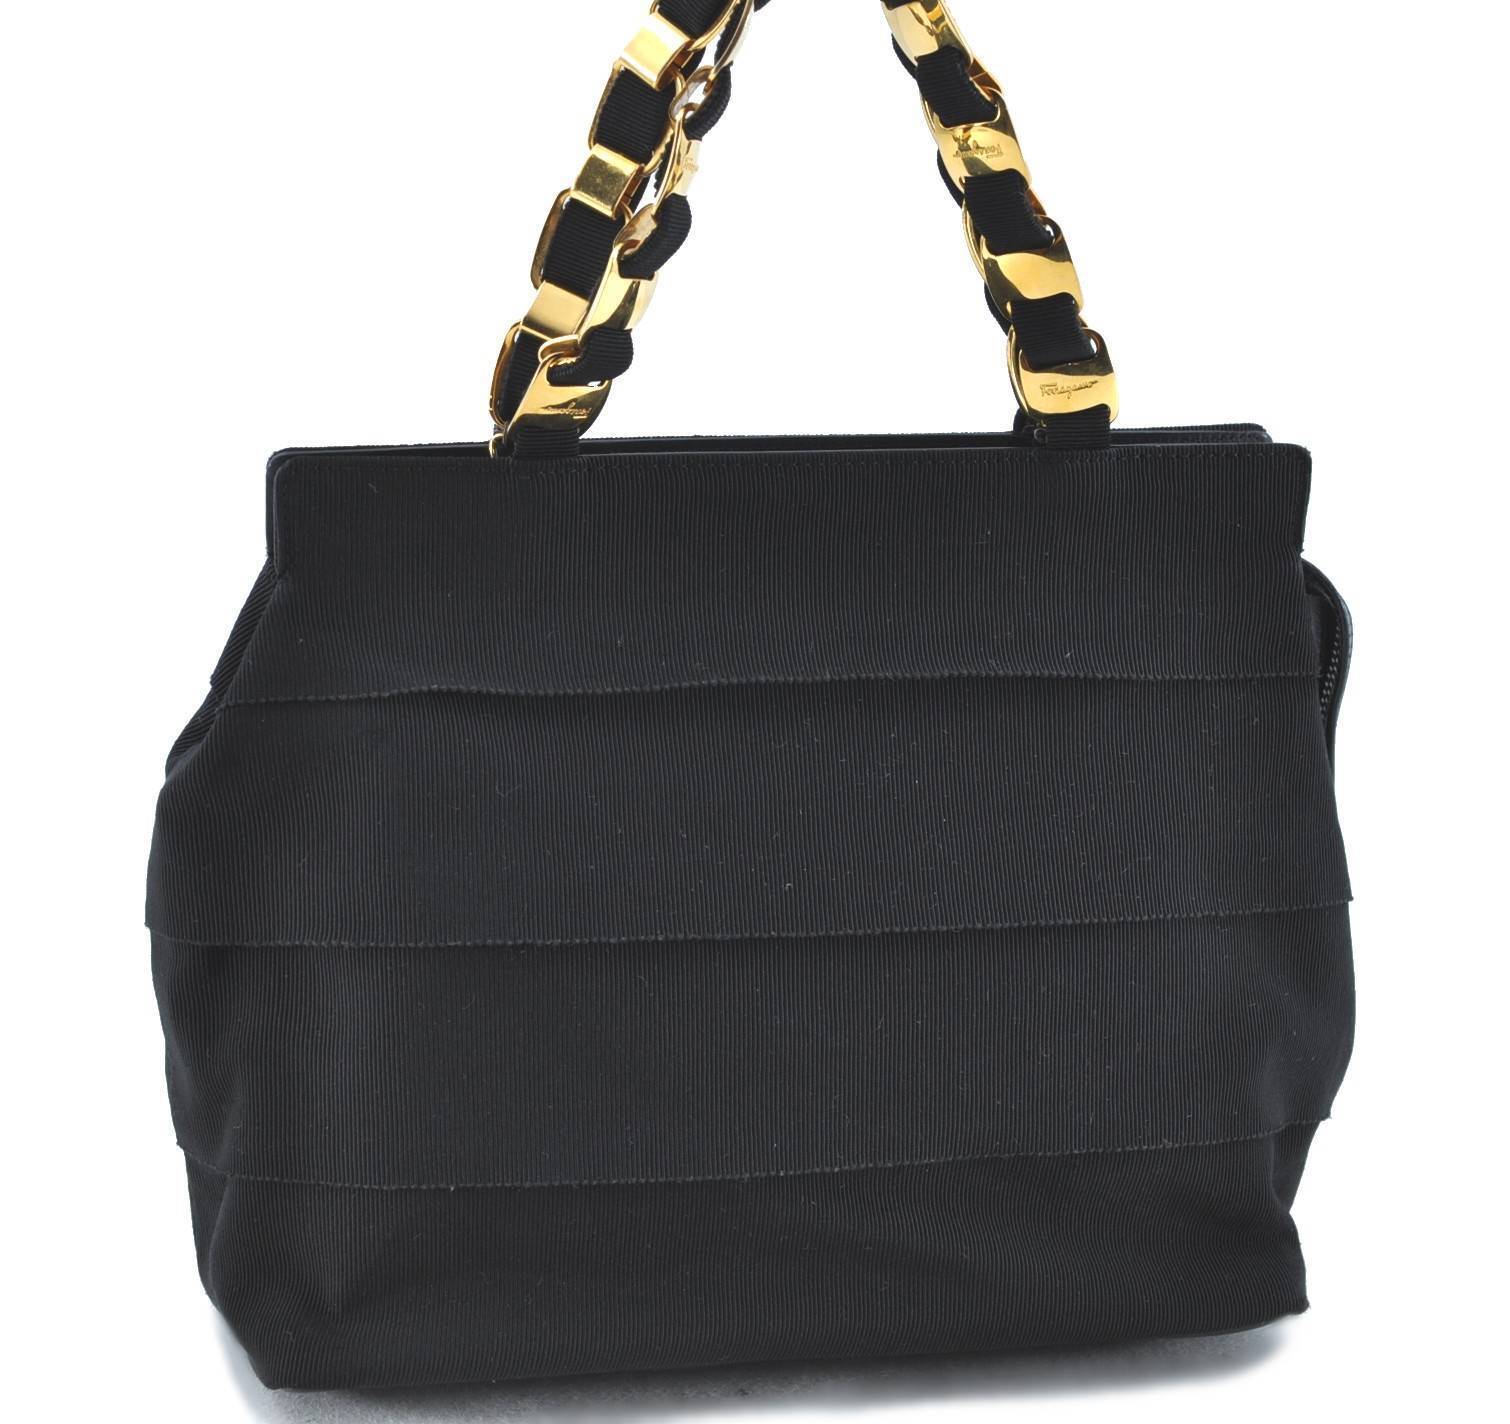 Authentic Ferragamo Canvas Leather Hand Tote Bag Purse Black H5753